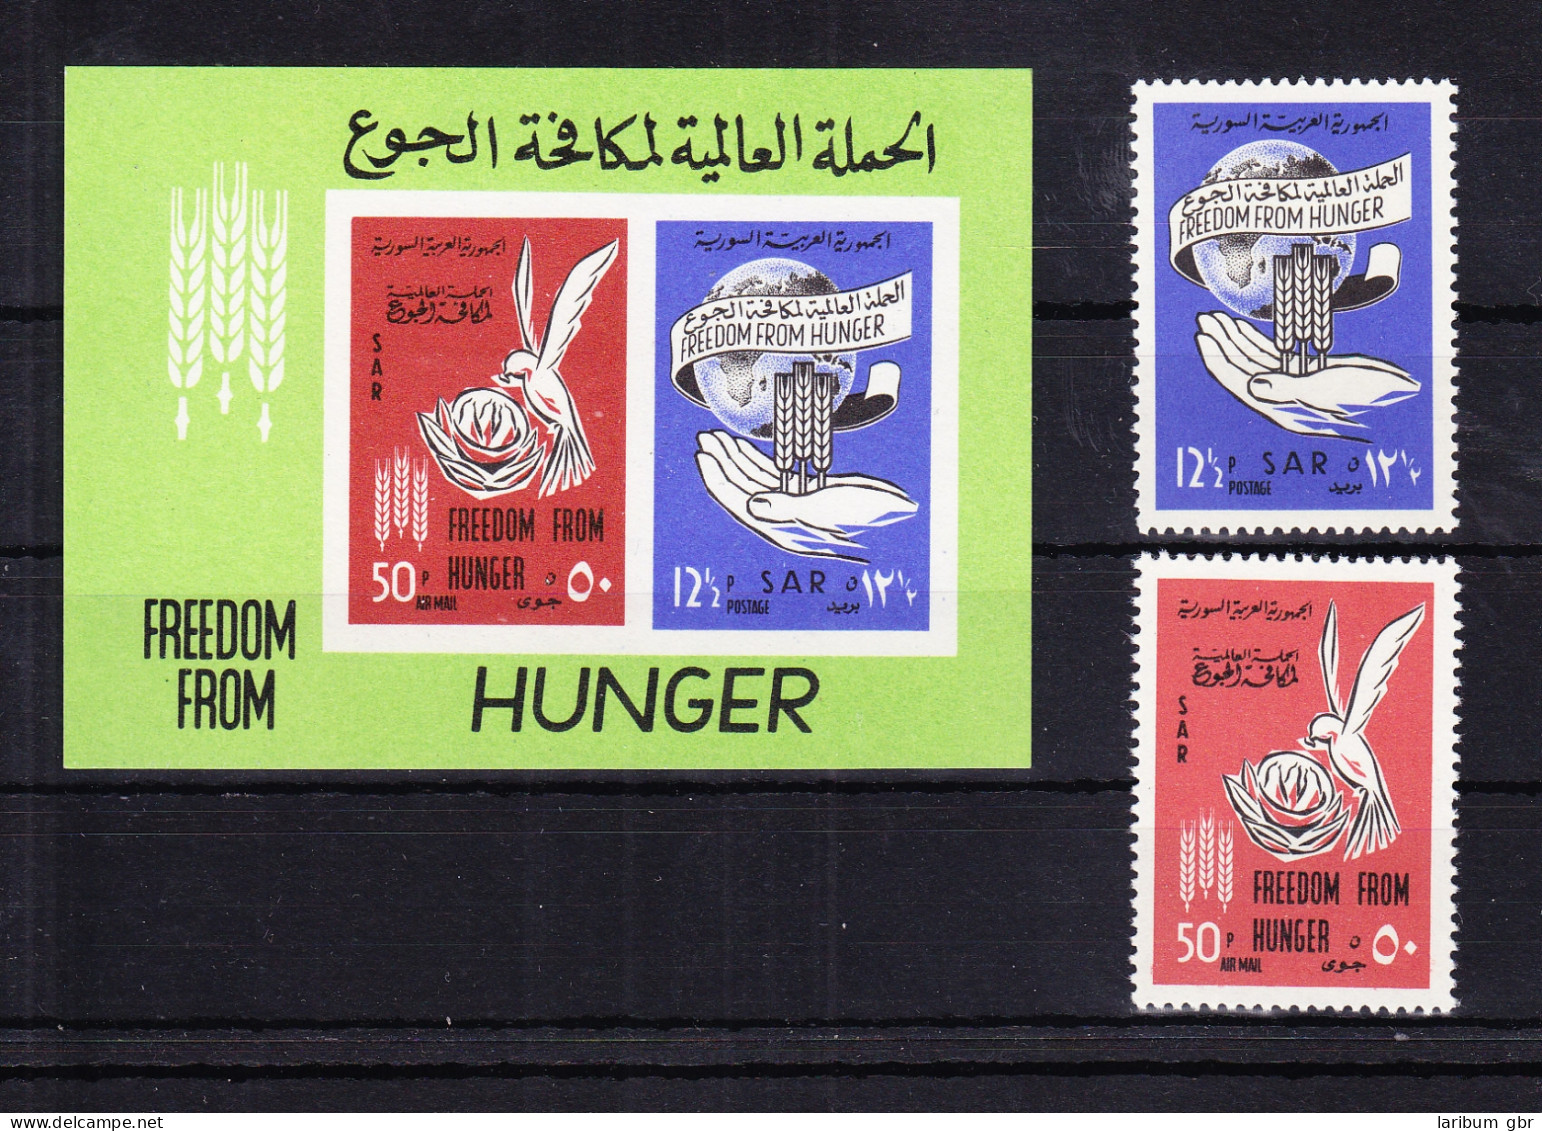 Syrien 831A-832A Und Block 49 Postfrisch Kapmpf Gegen Den Hunger, MNH #RB470 - Syria